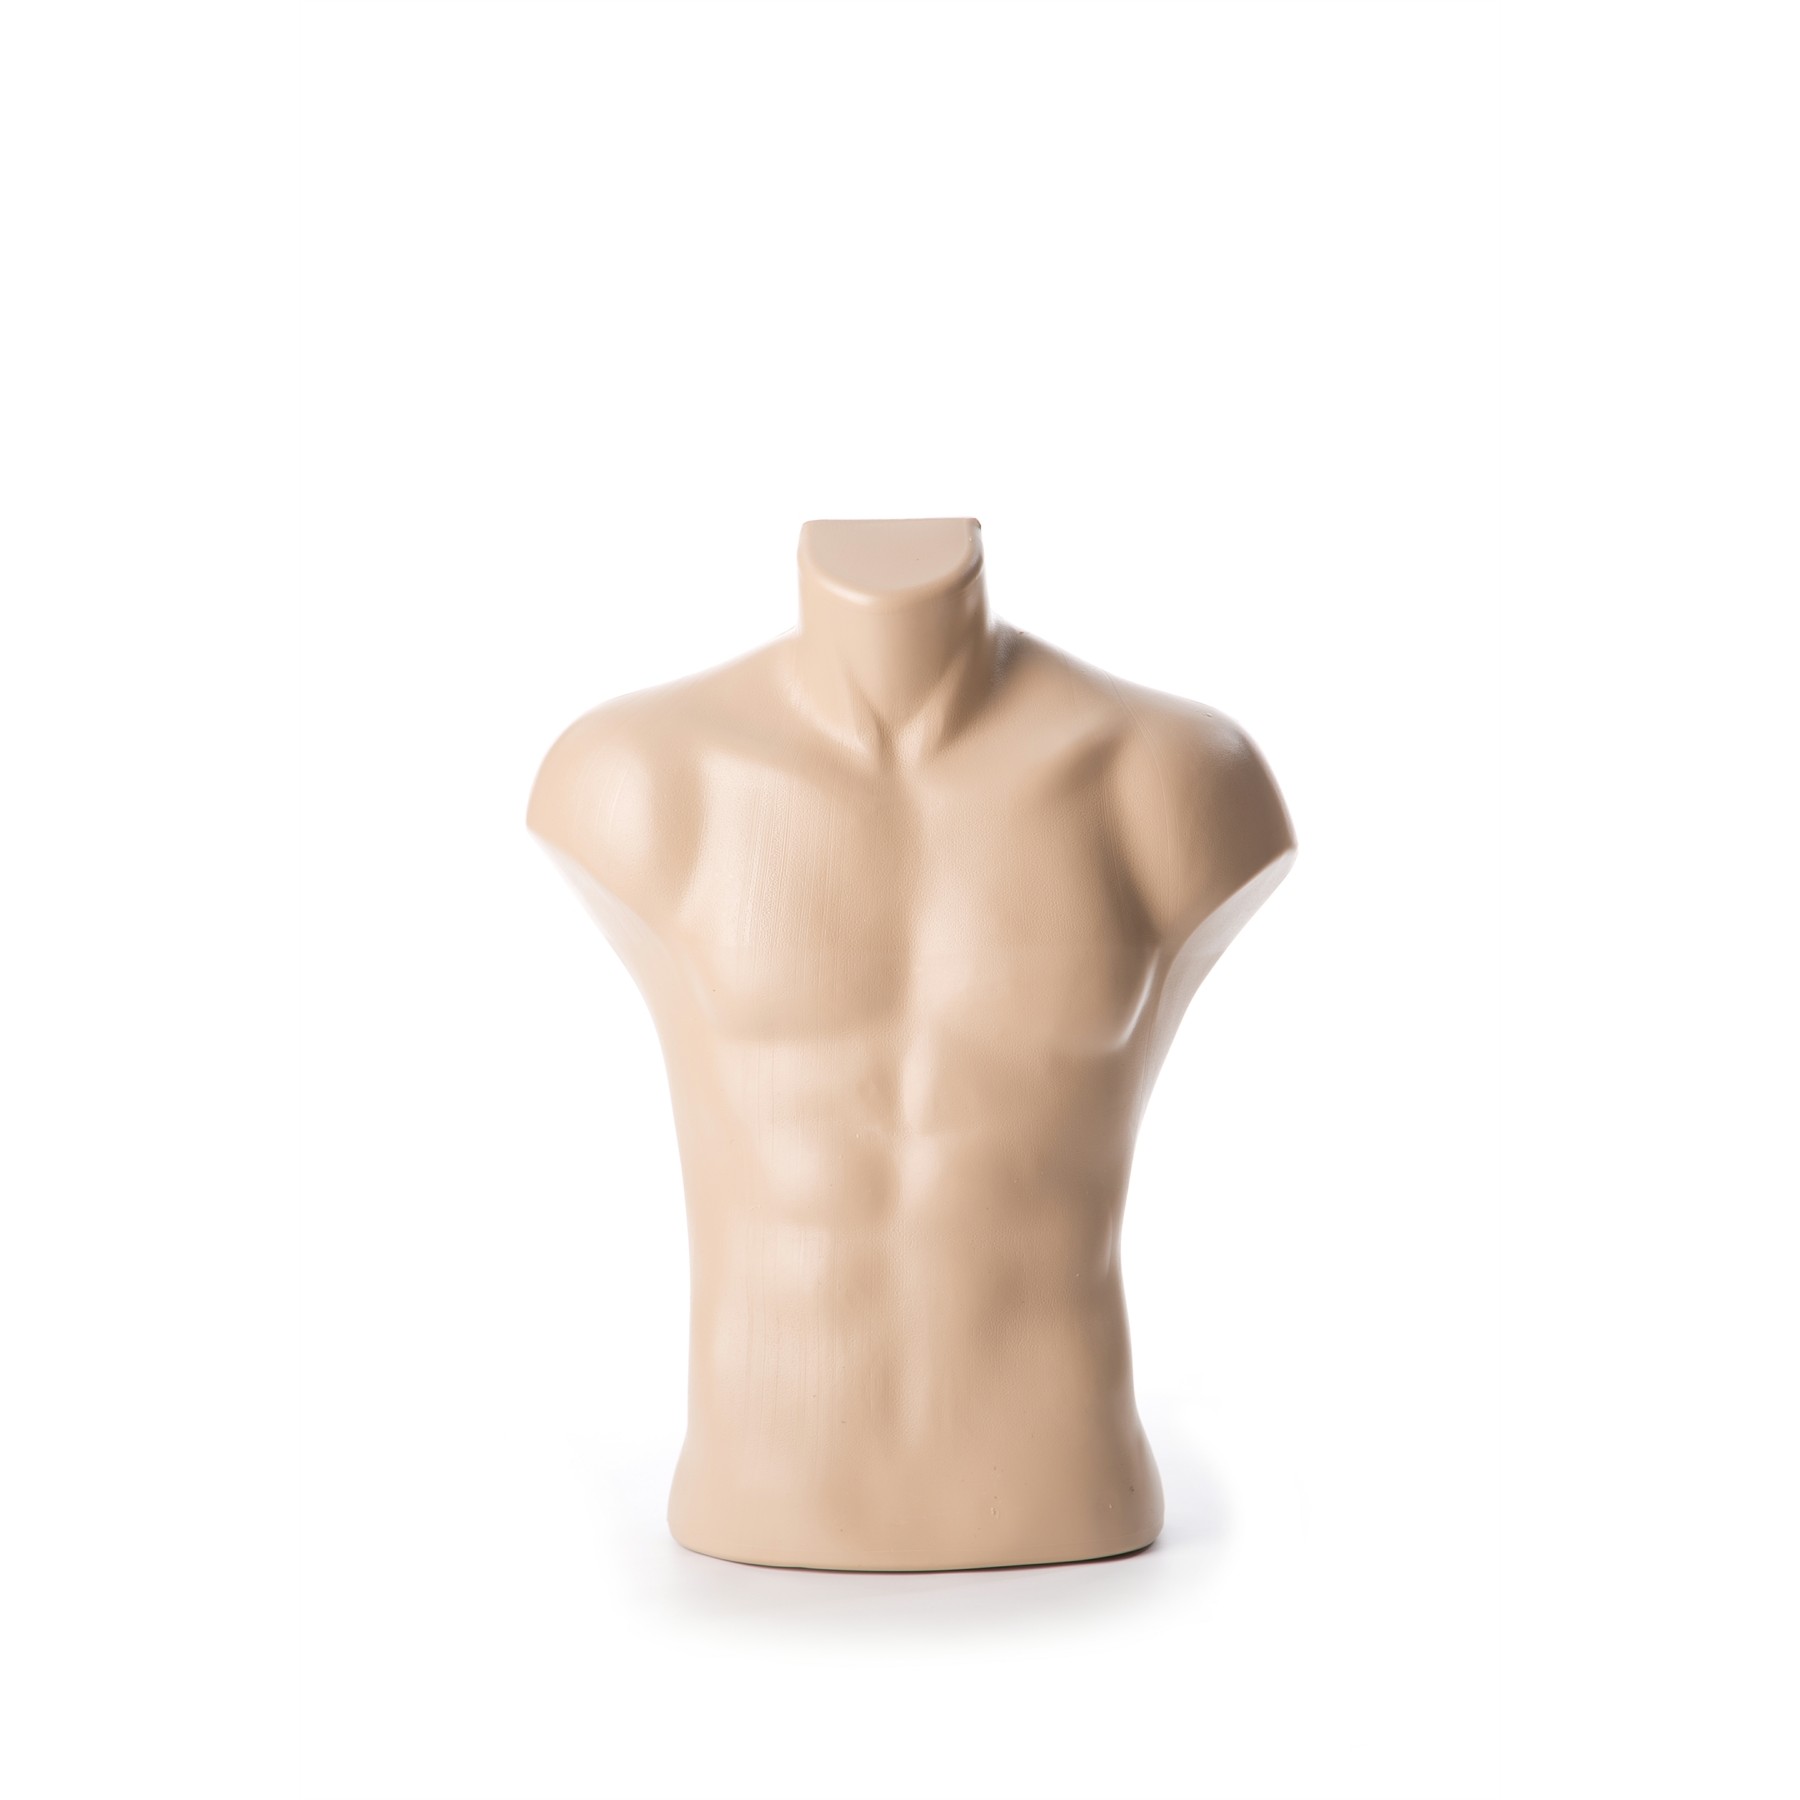 Skin Color Male Armless Torso in Natural Pose, torsos, mannequins ...